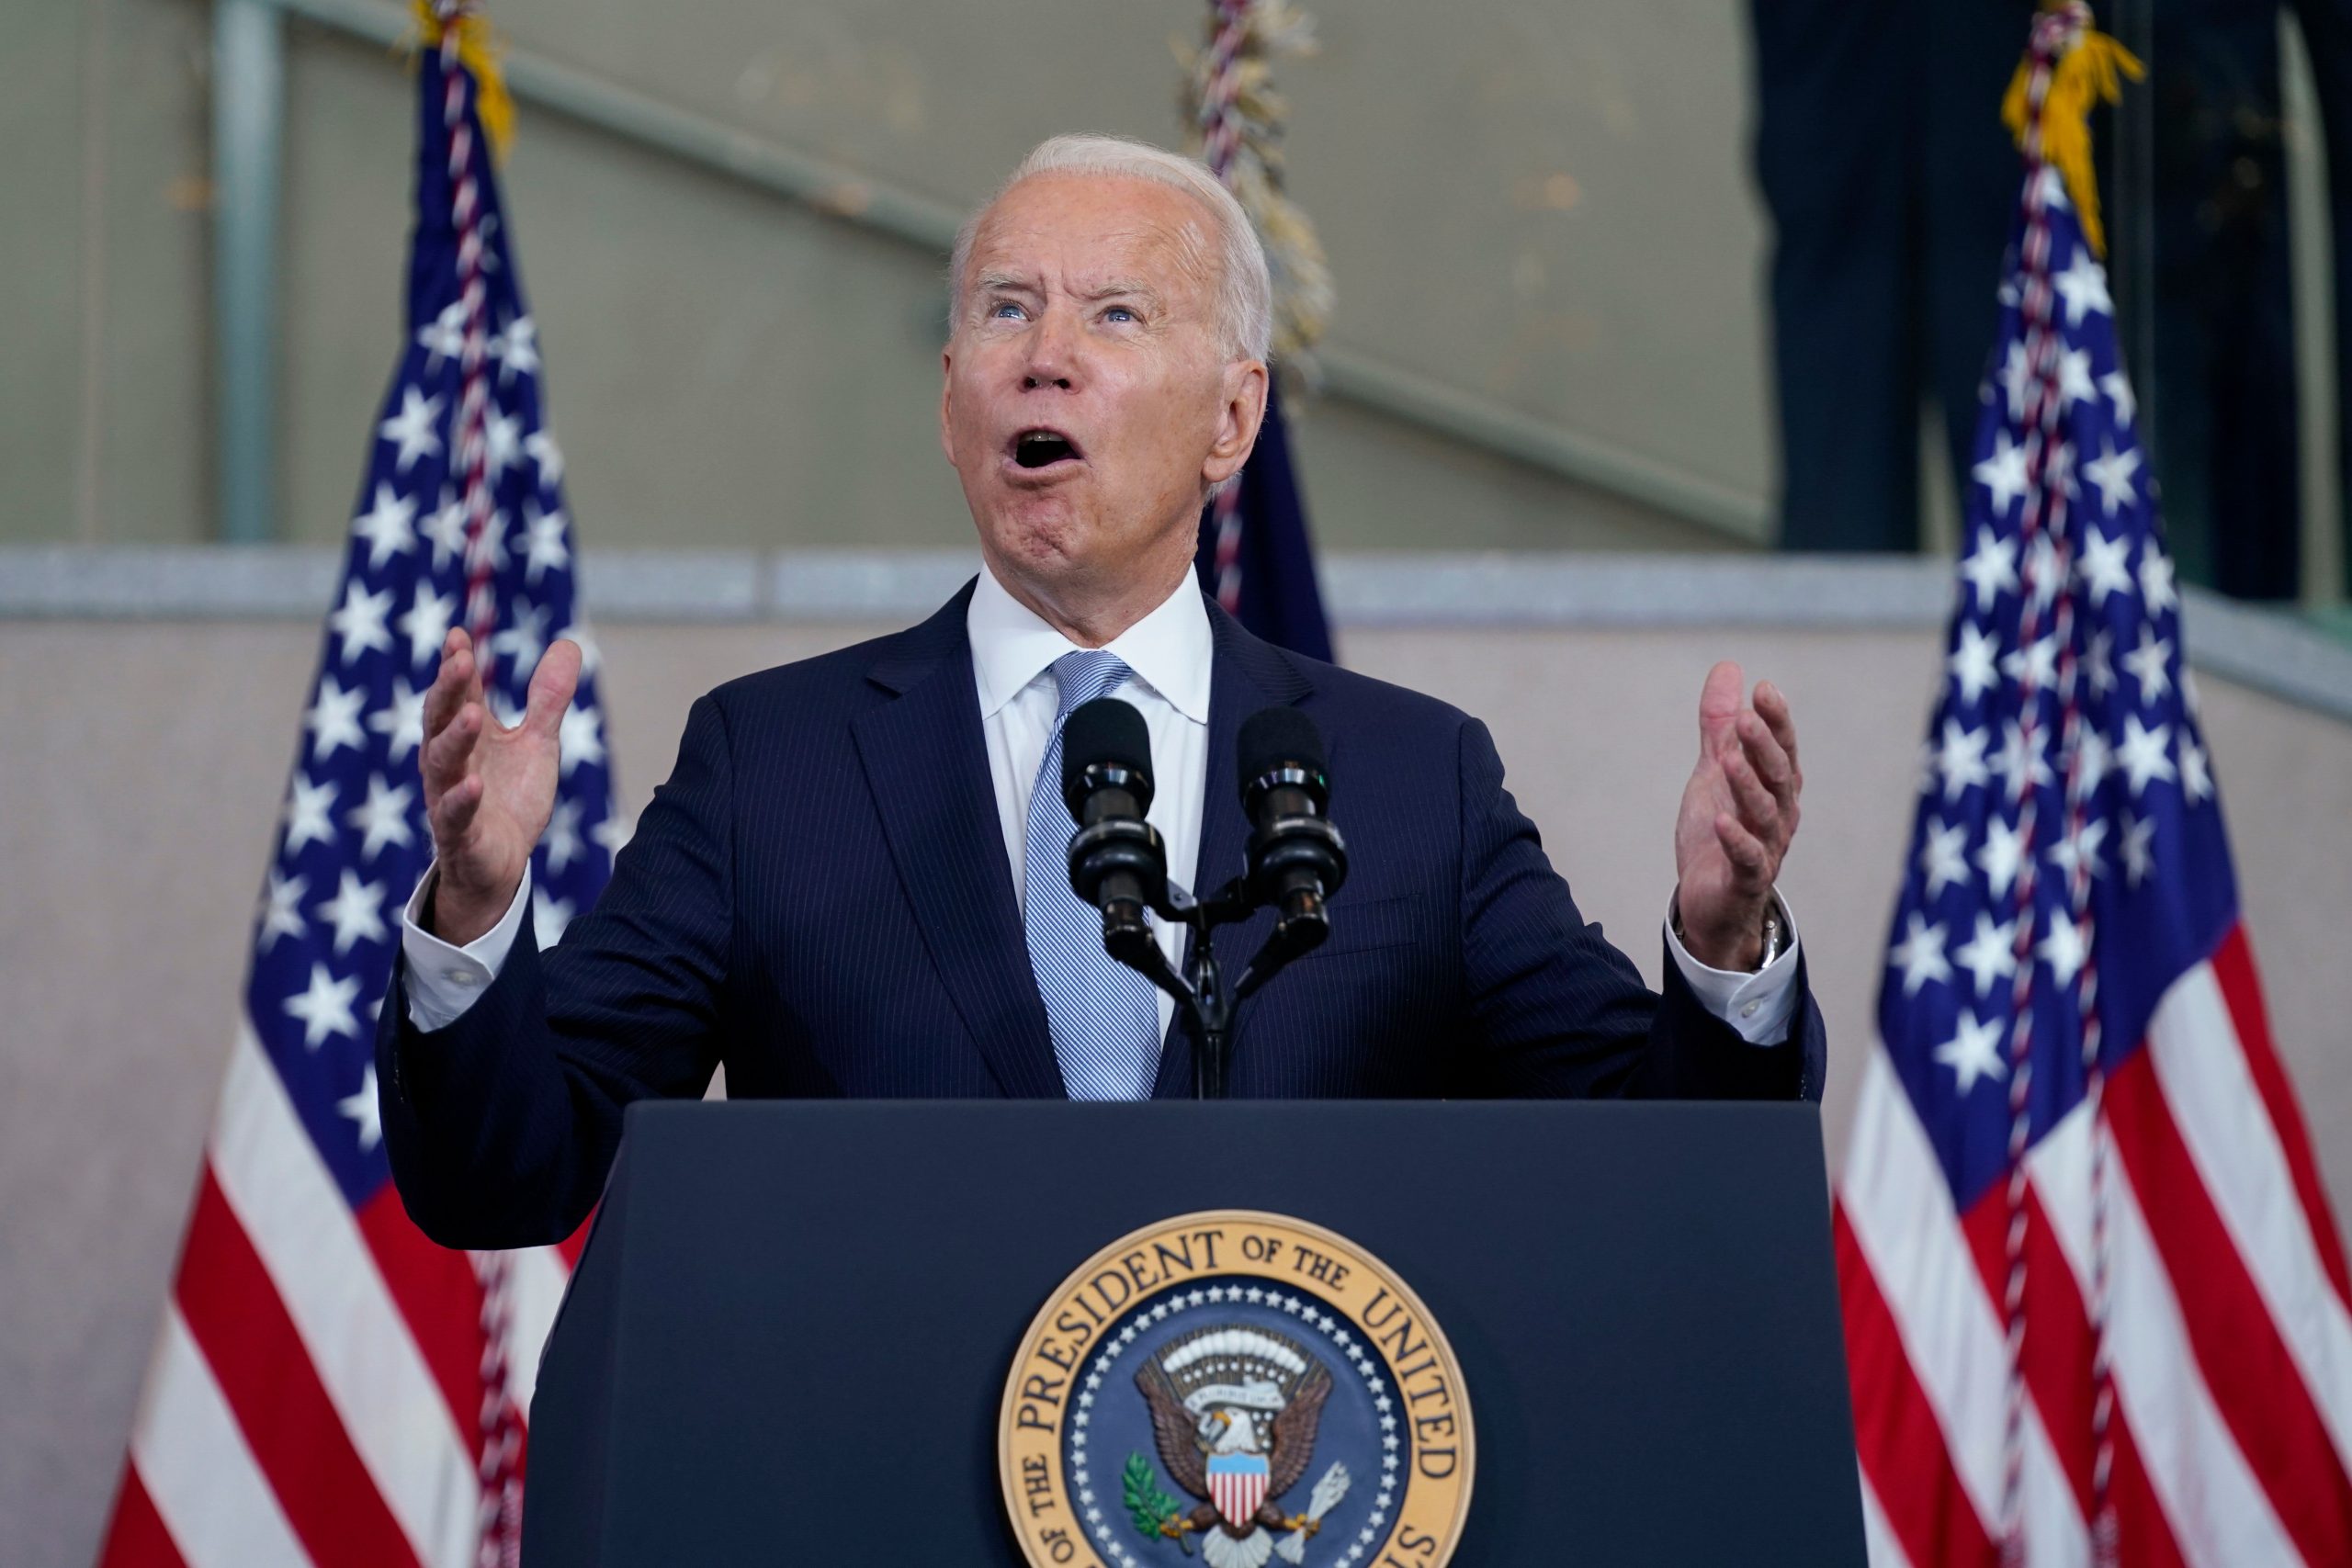 ‘Not on the agenda’: Joe Biden on sending US forces to Haiti